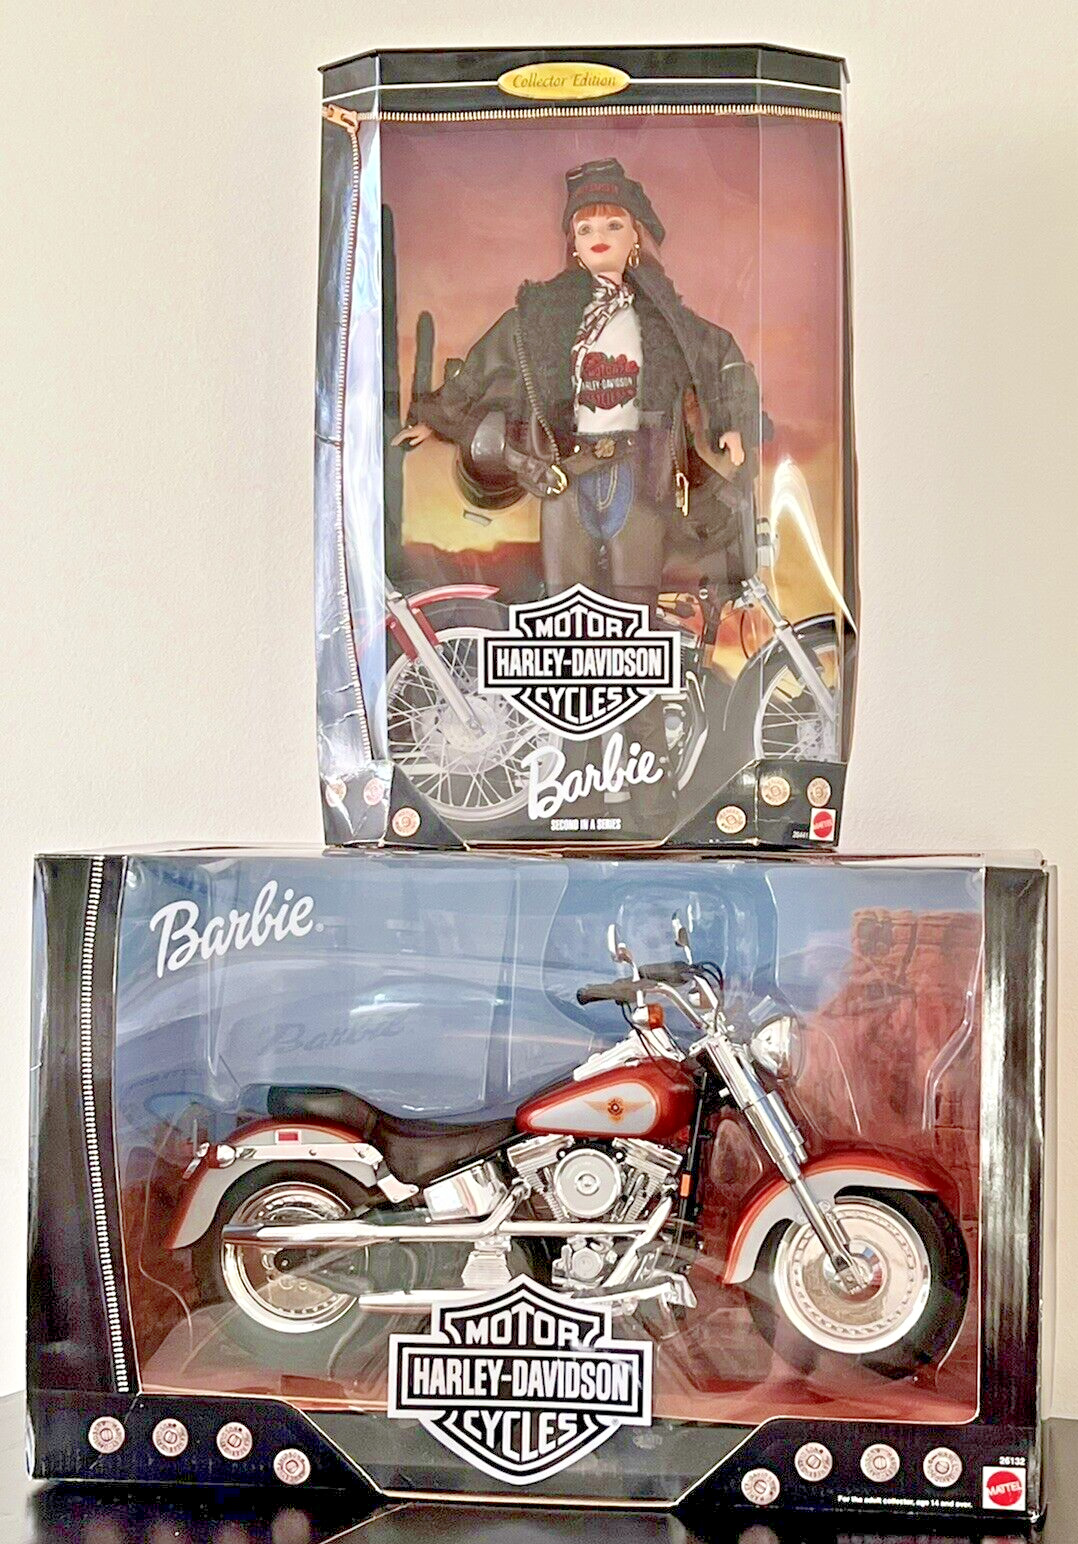 Collectible Mattel Barbie/Harley Motorcycle Rare w/Certif. See Descript. Details